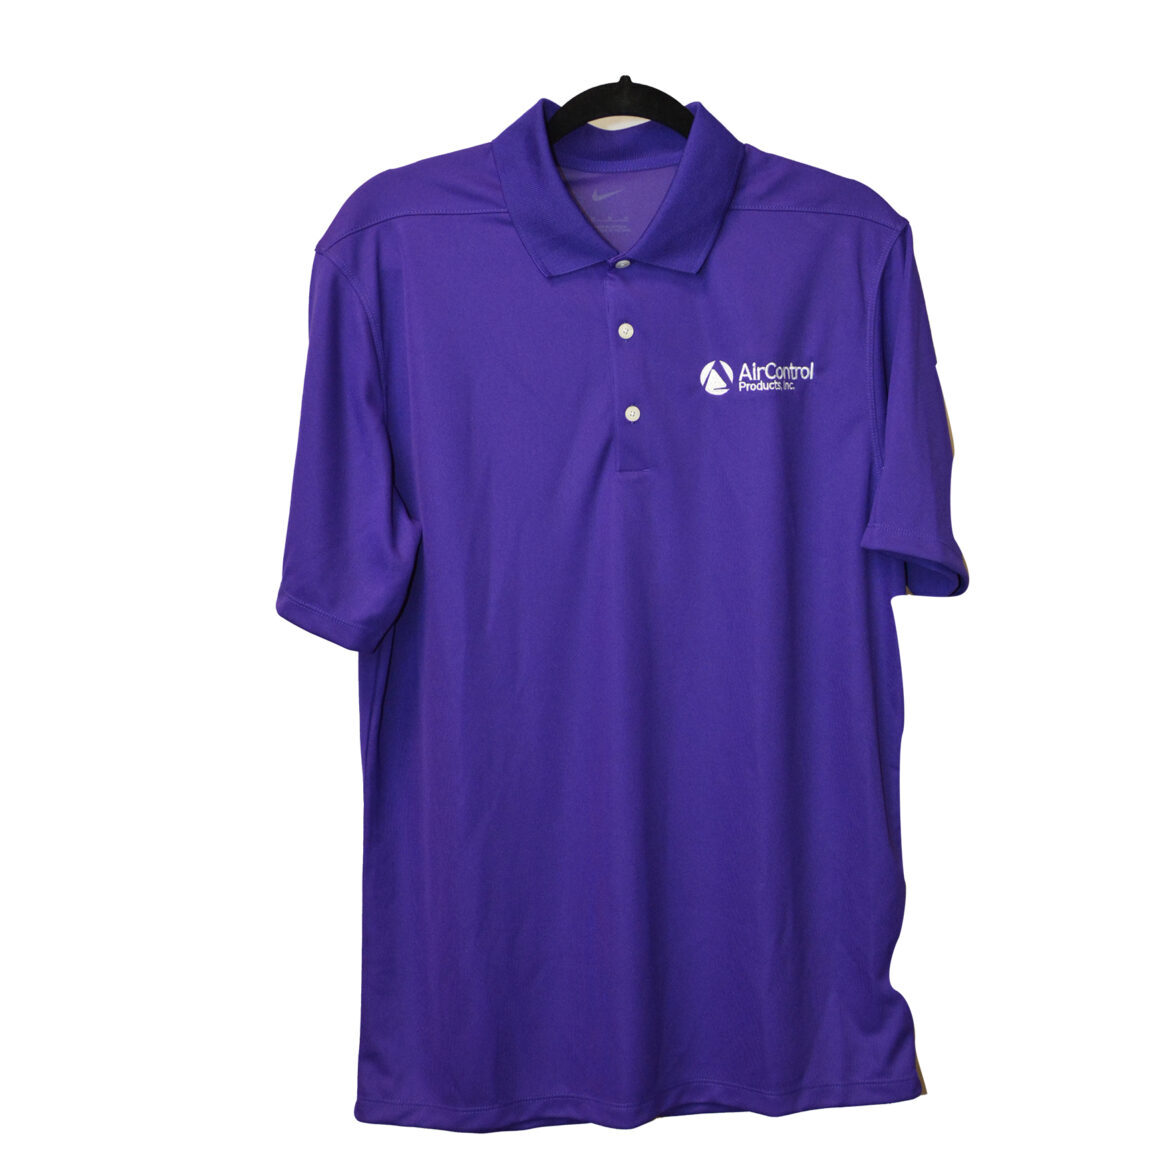 (2) Nike Golf Purple Qty: 1-M $40